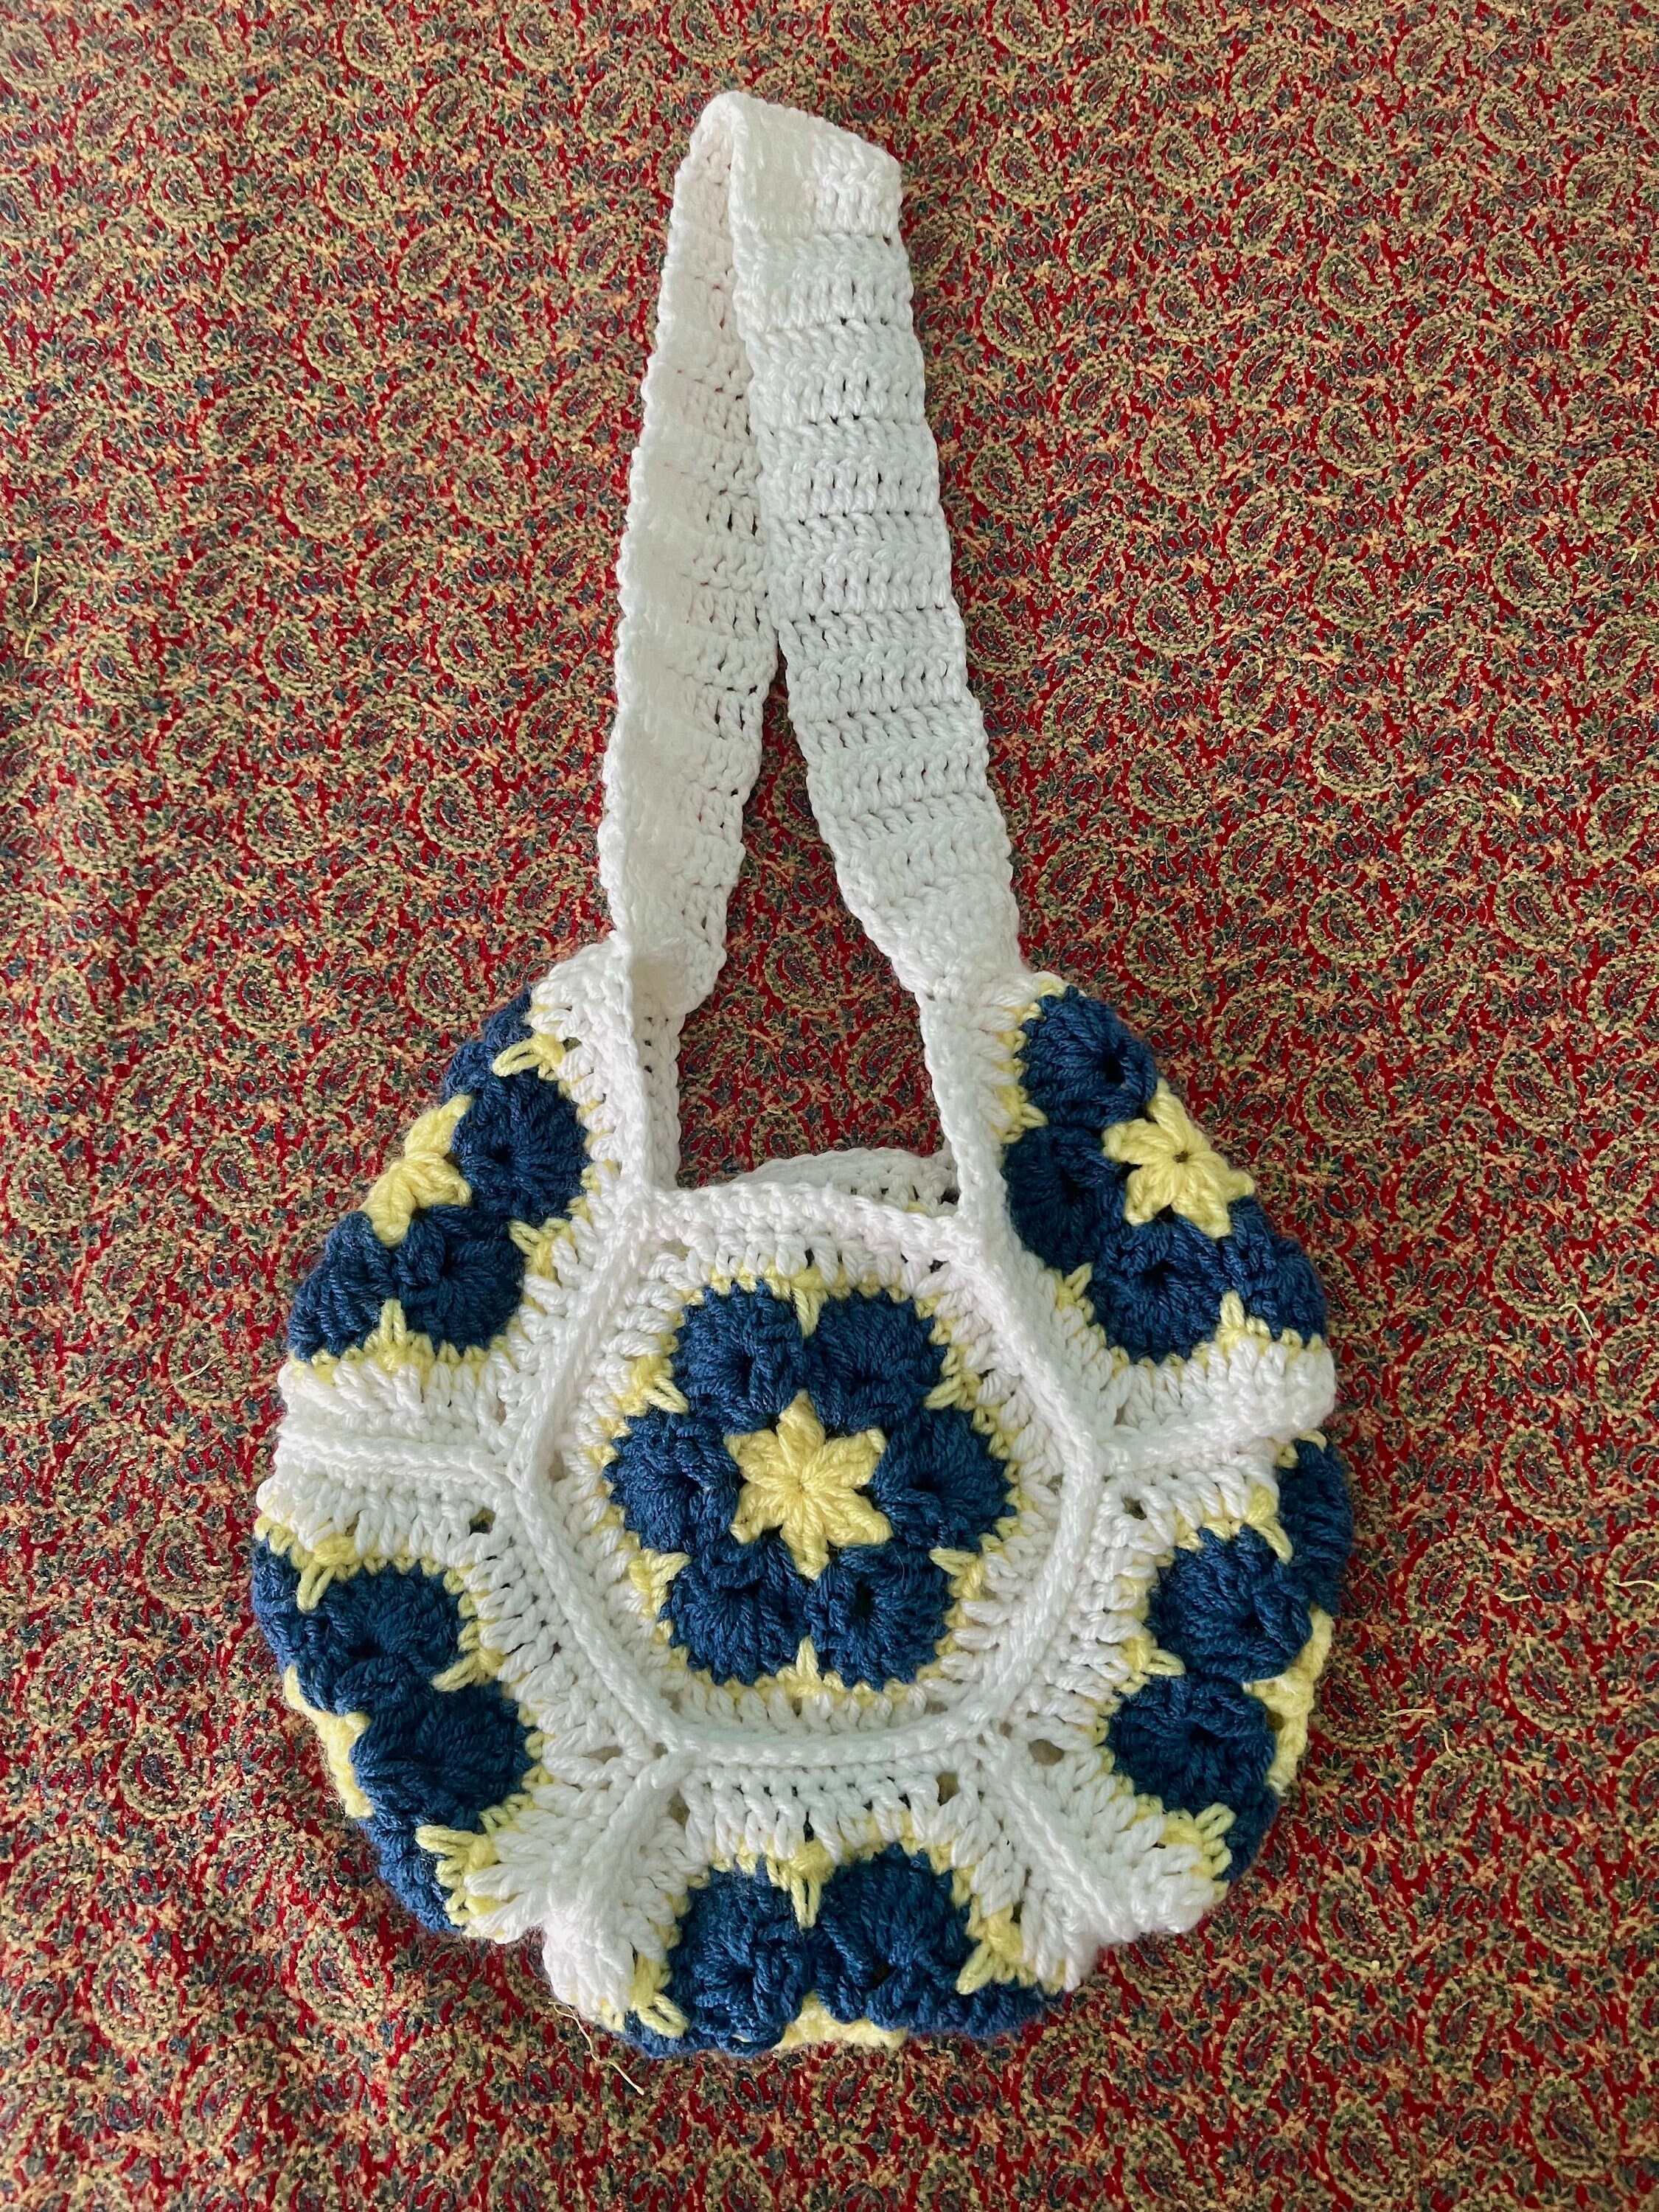 DIY 材料包六邊型手提袋Hexagon African Flower Tote Bag – Siubo Crochet